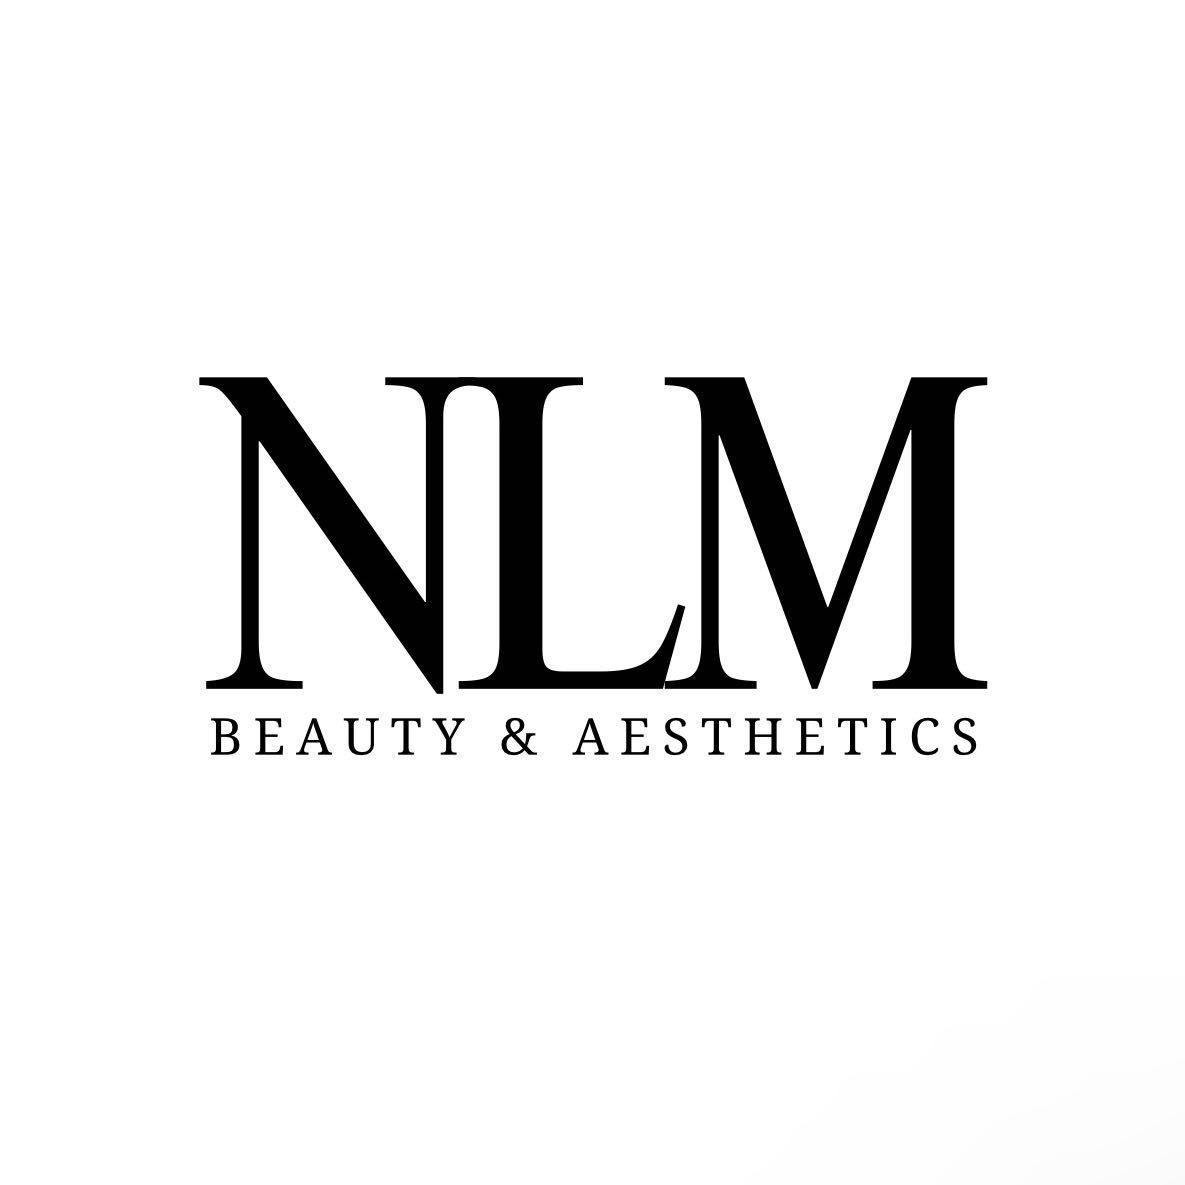 NLM Beauty Aesthetics, 7 Risedale drive, Germany beck, fulford, York